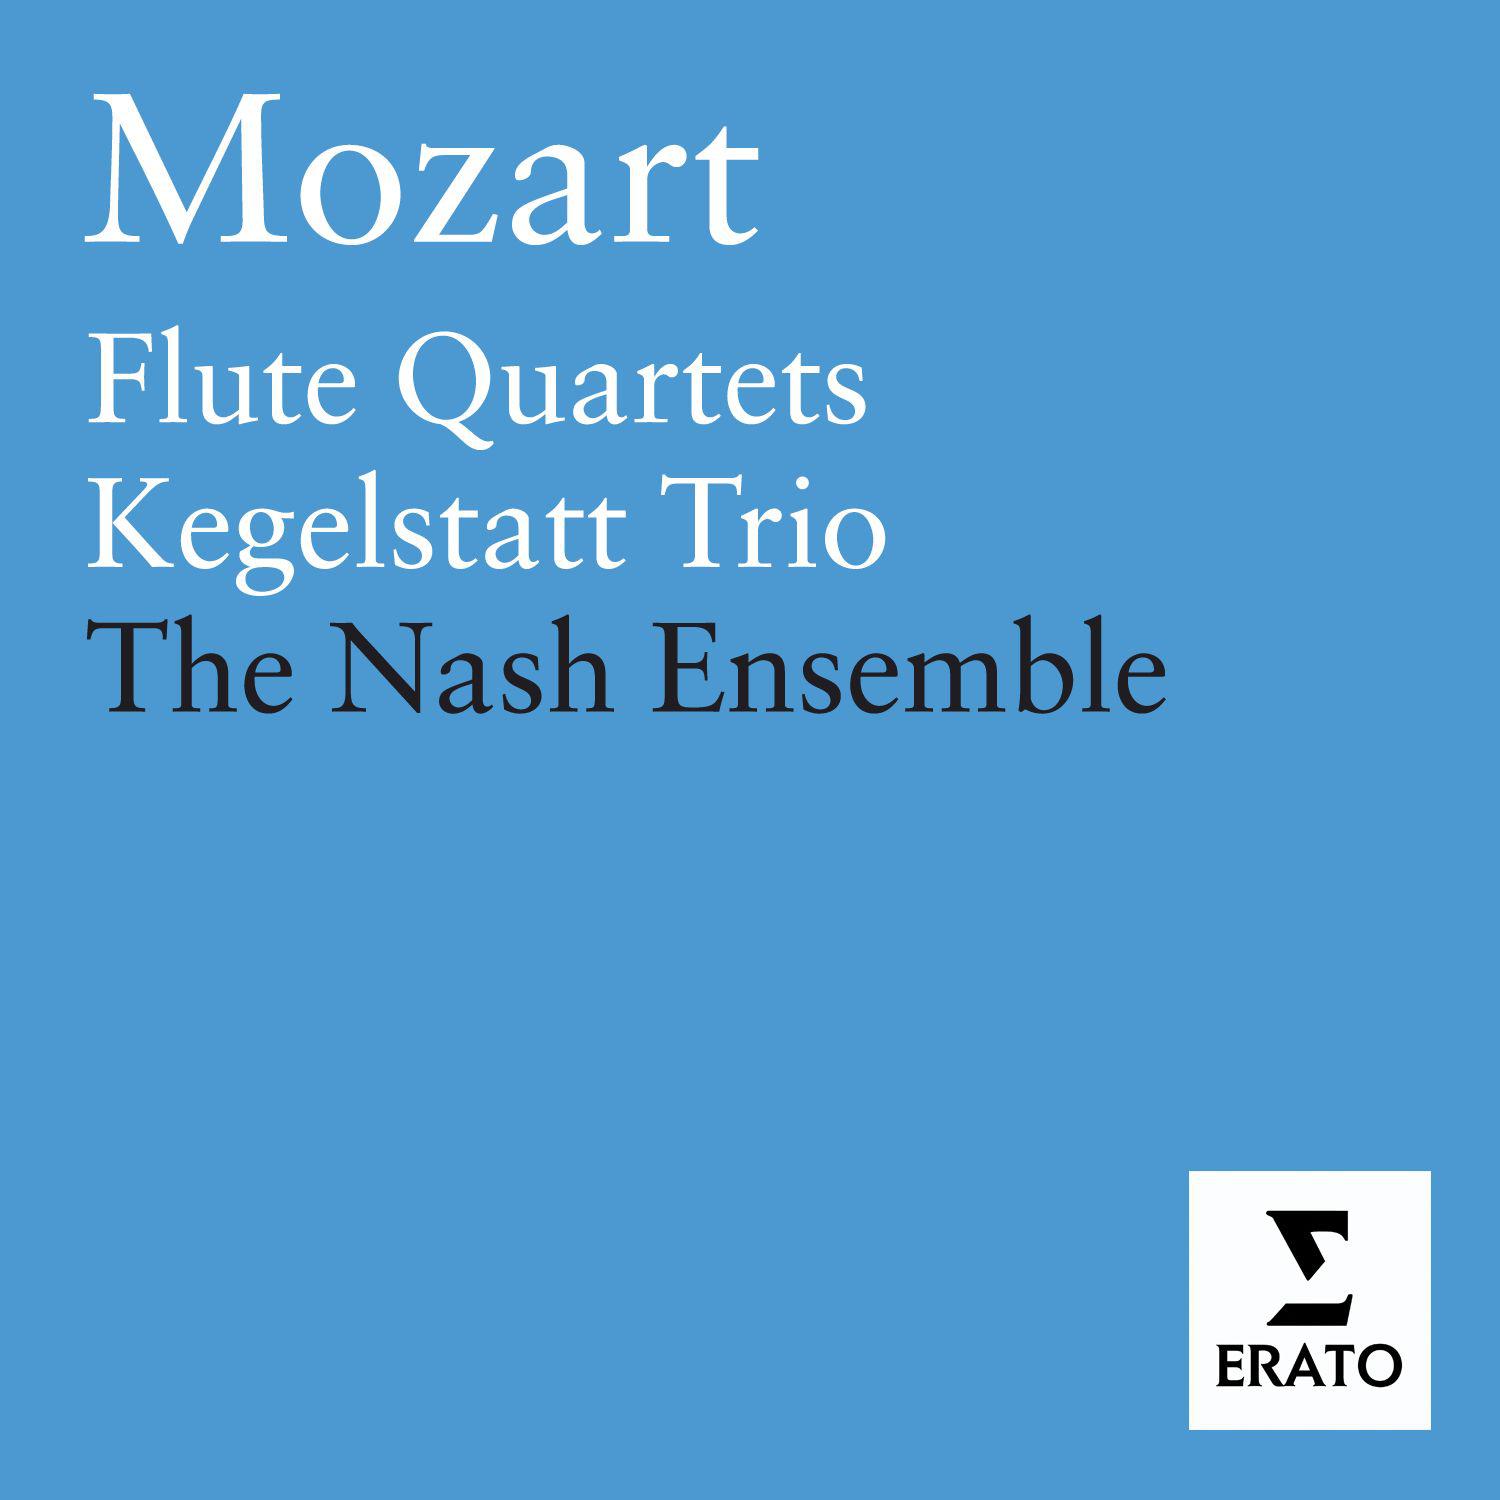 Flute Quartet No. 4 in A Major, K. 298: II. Menuetto - Trio